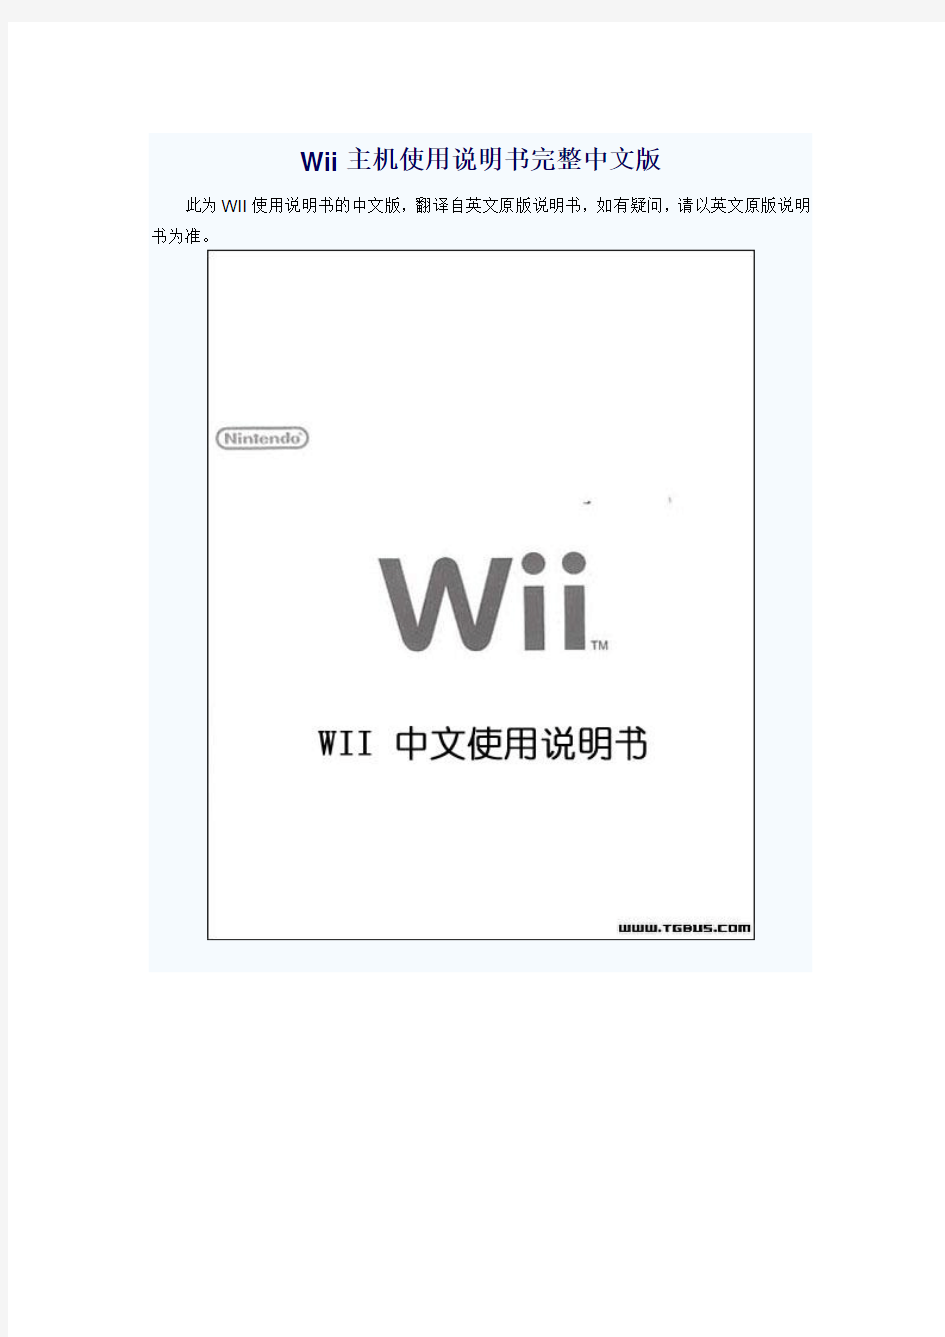 Wii主机安装和使用说明书完整中文版